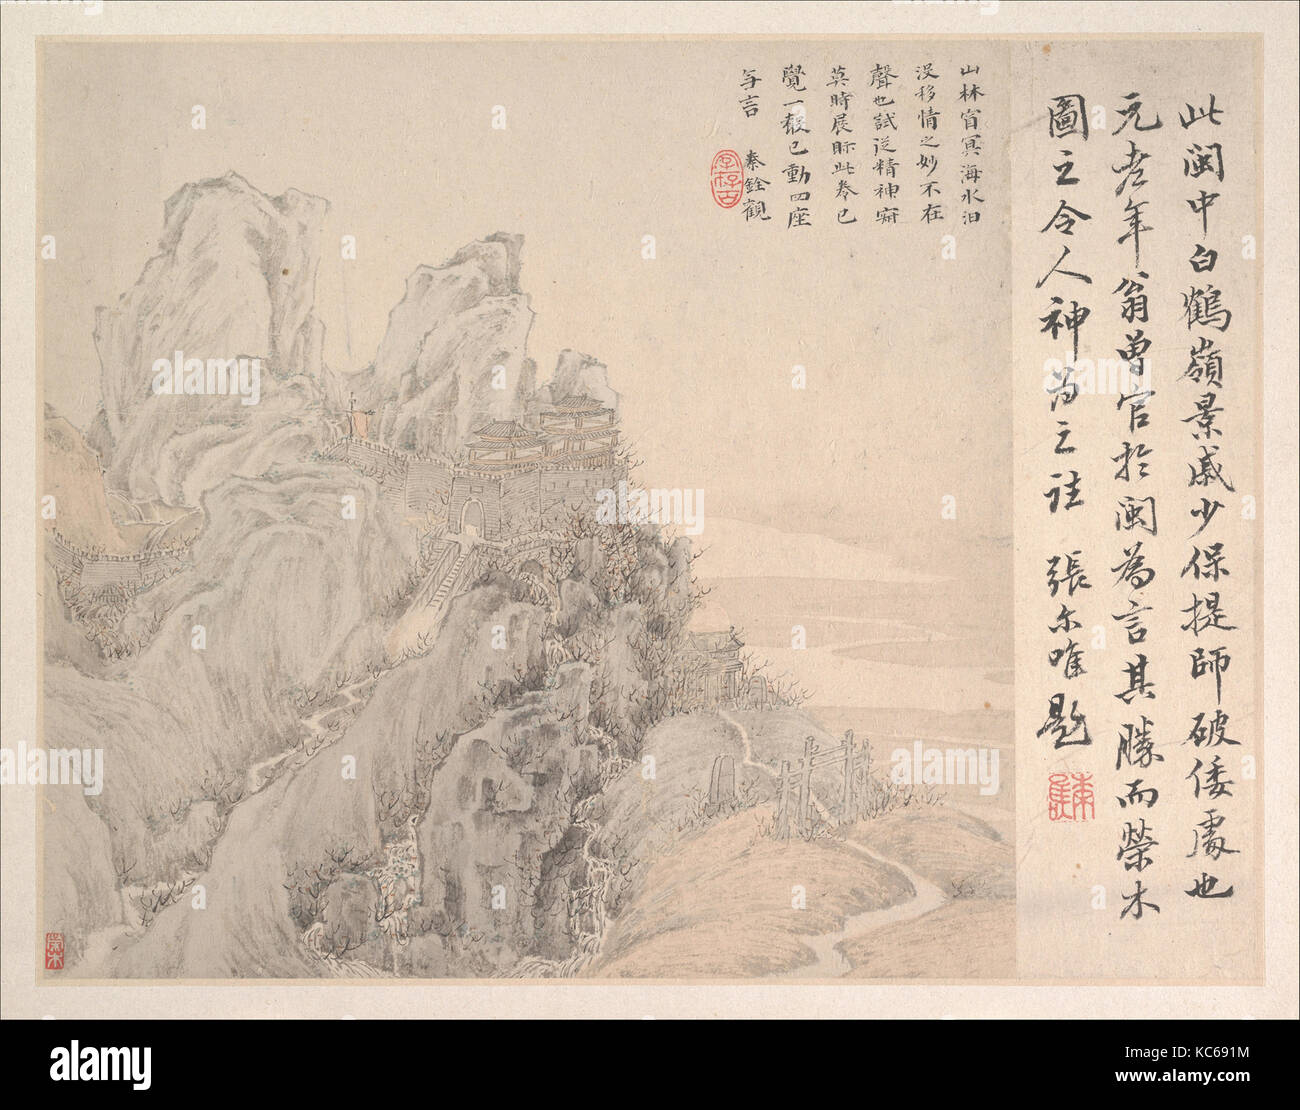 清 葉欣 白鶴嶺圖 冊頁, gru bianca montagna, Ye Xin, databile al 1654-55 Foto Stock